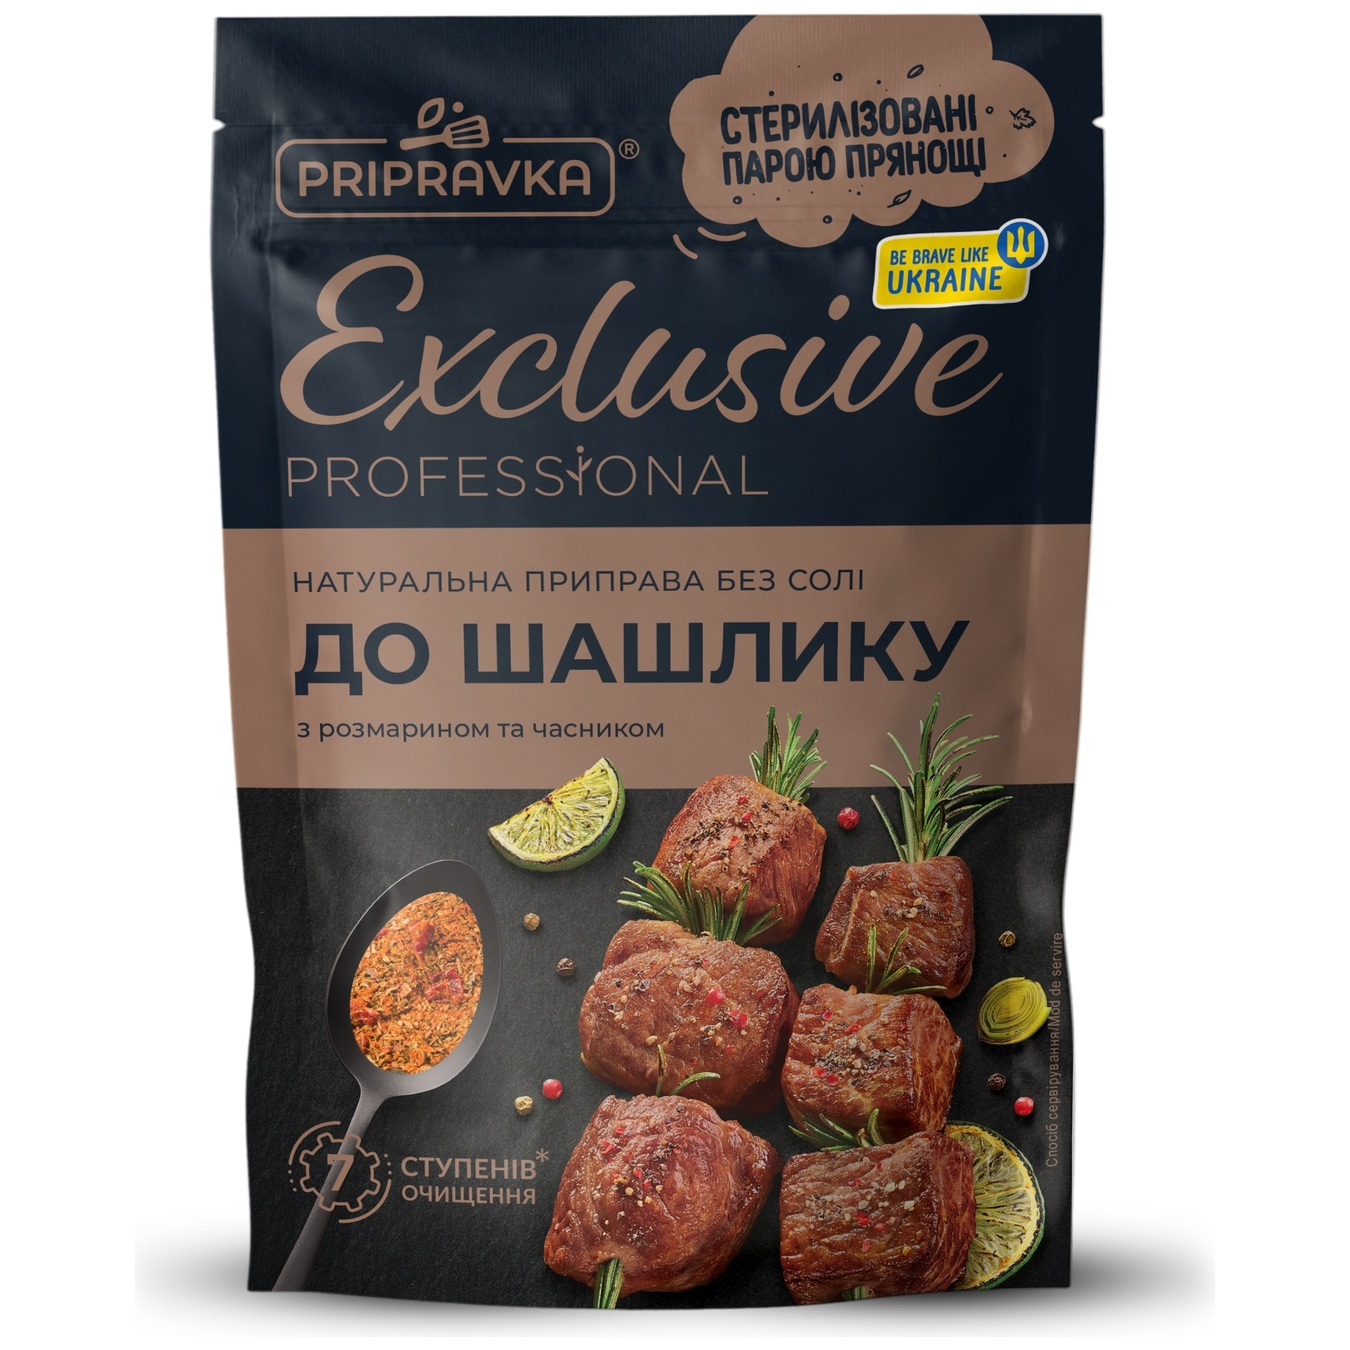 Pripravka Exclusive Professional For Shashlick Natural Without Salt Seasoning 45g